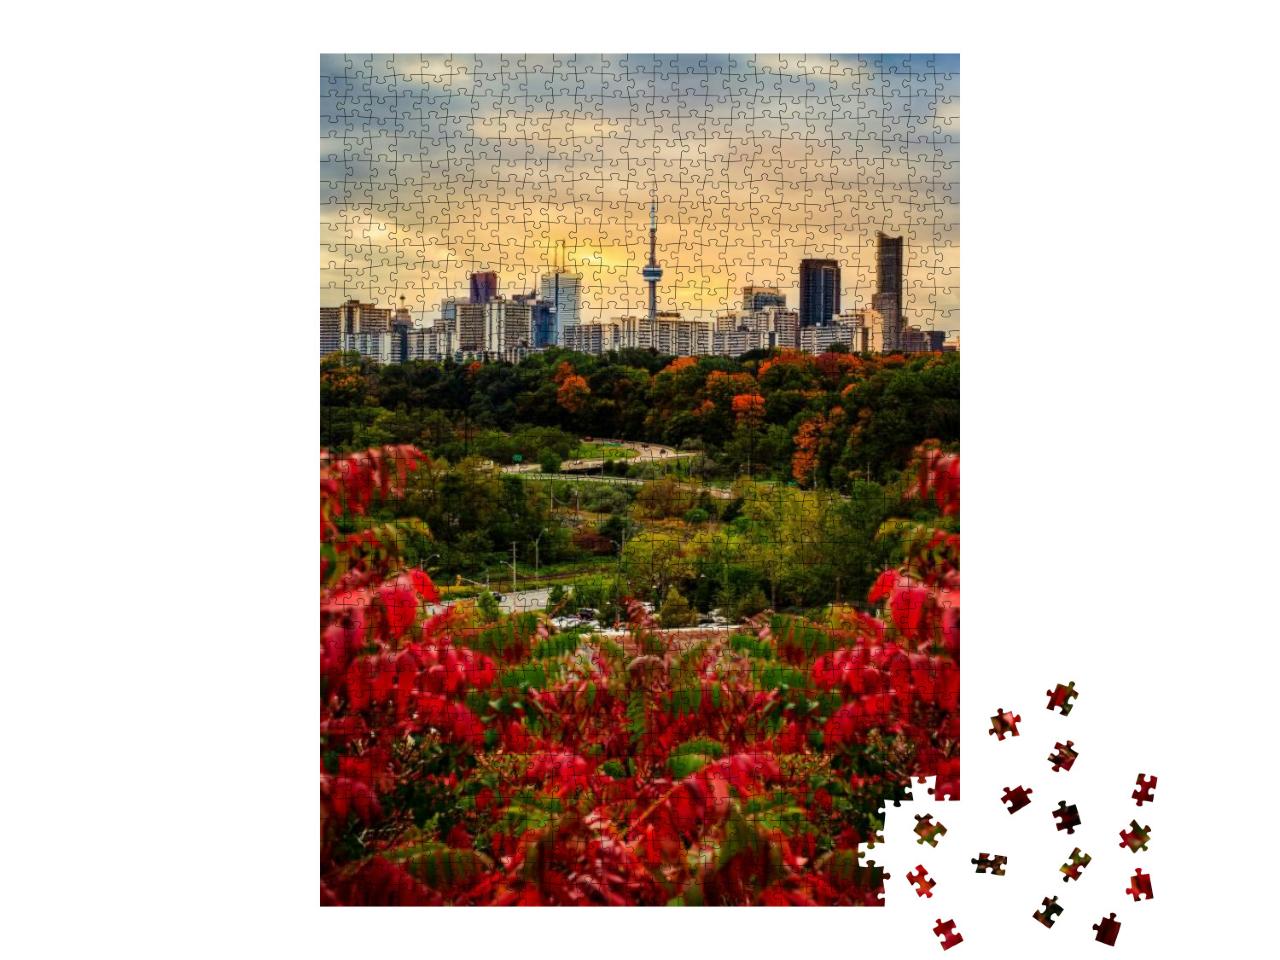 Puzzle 1000 Teile „Toronto im Herbst bei Sonnenuntergang“